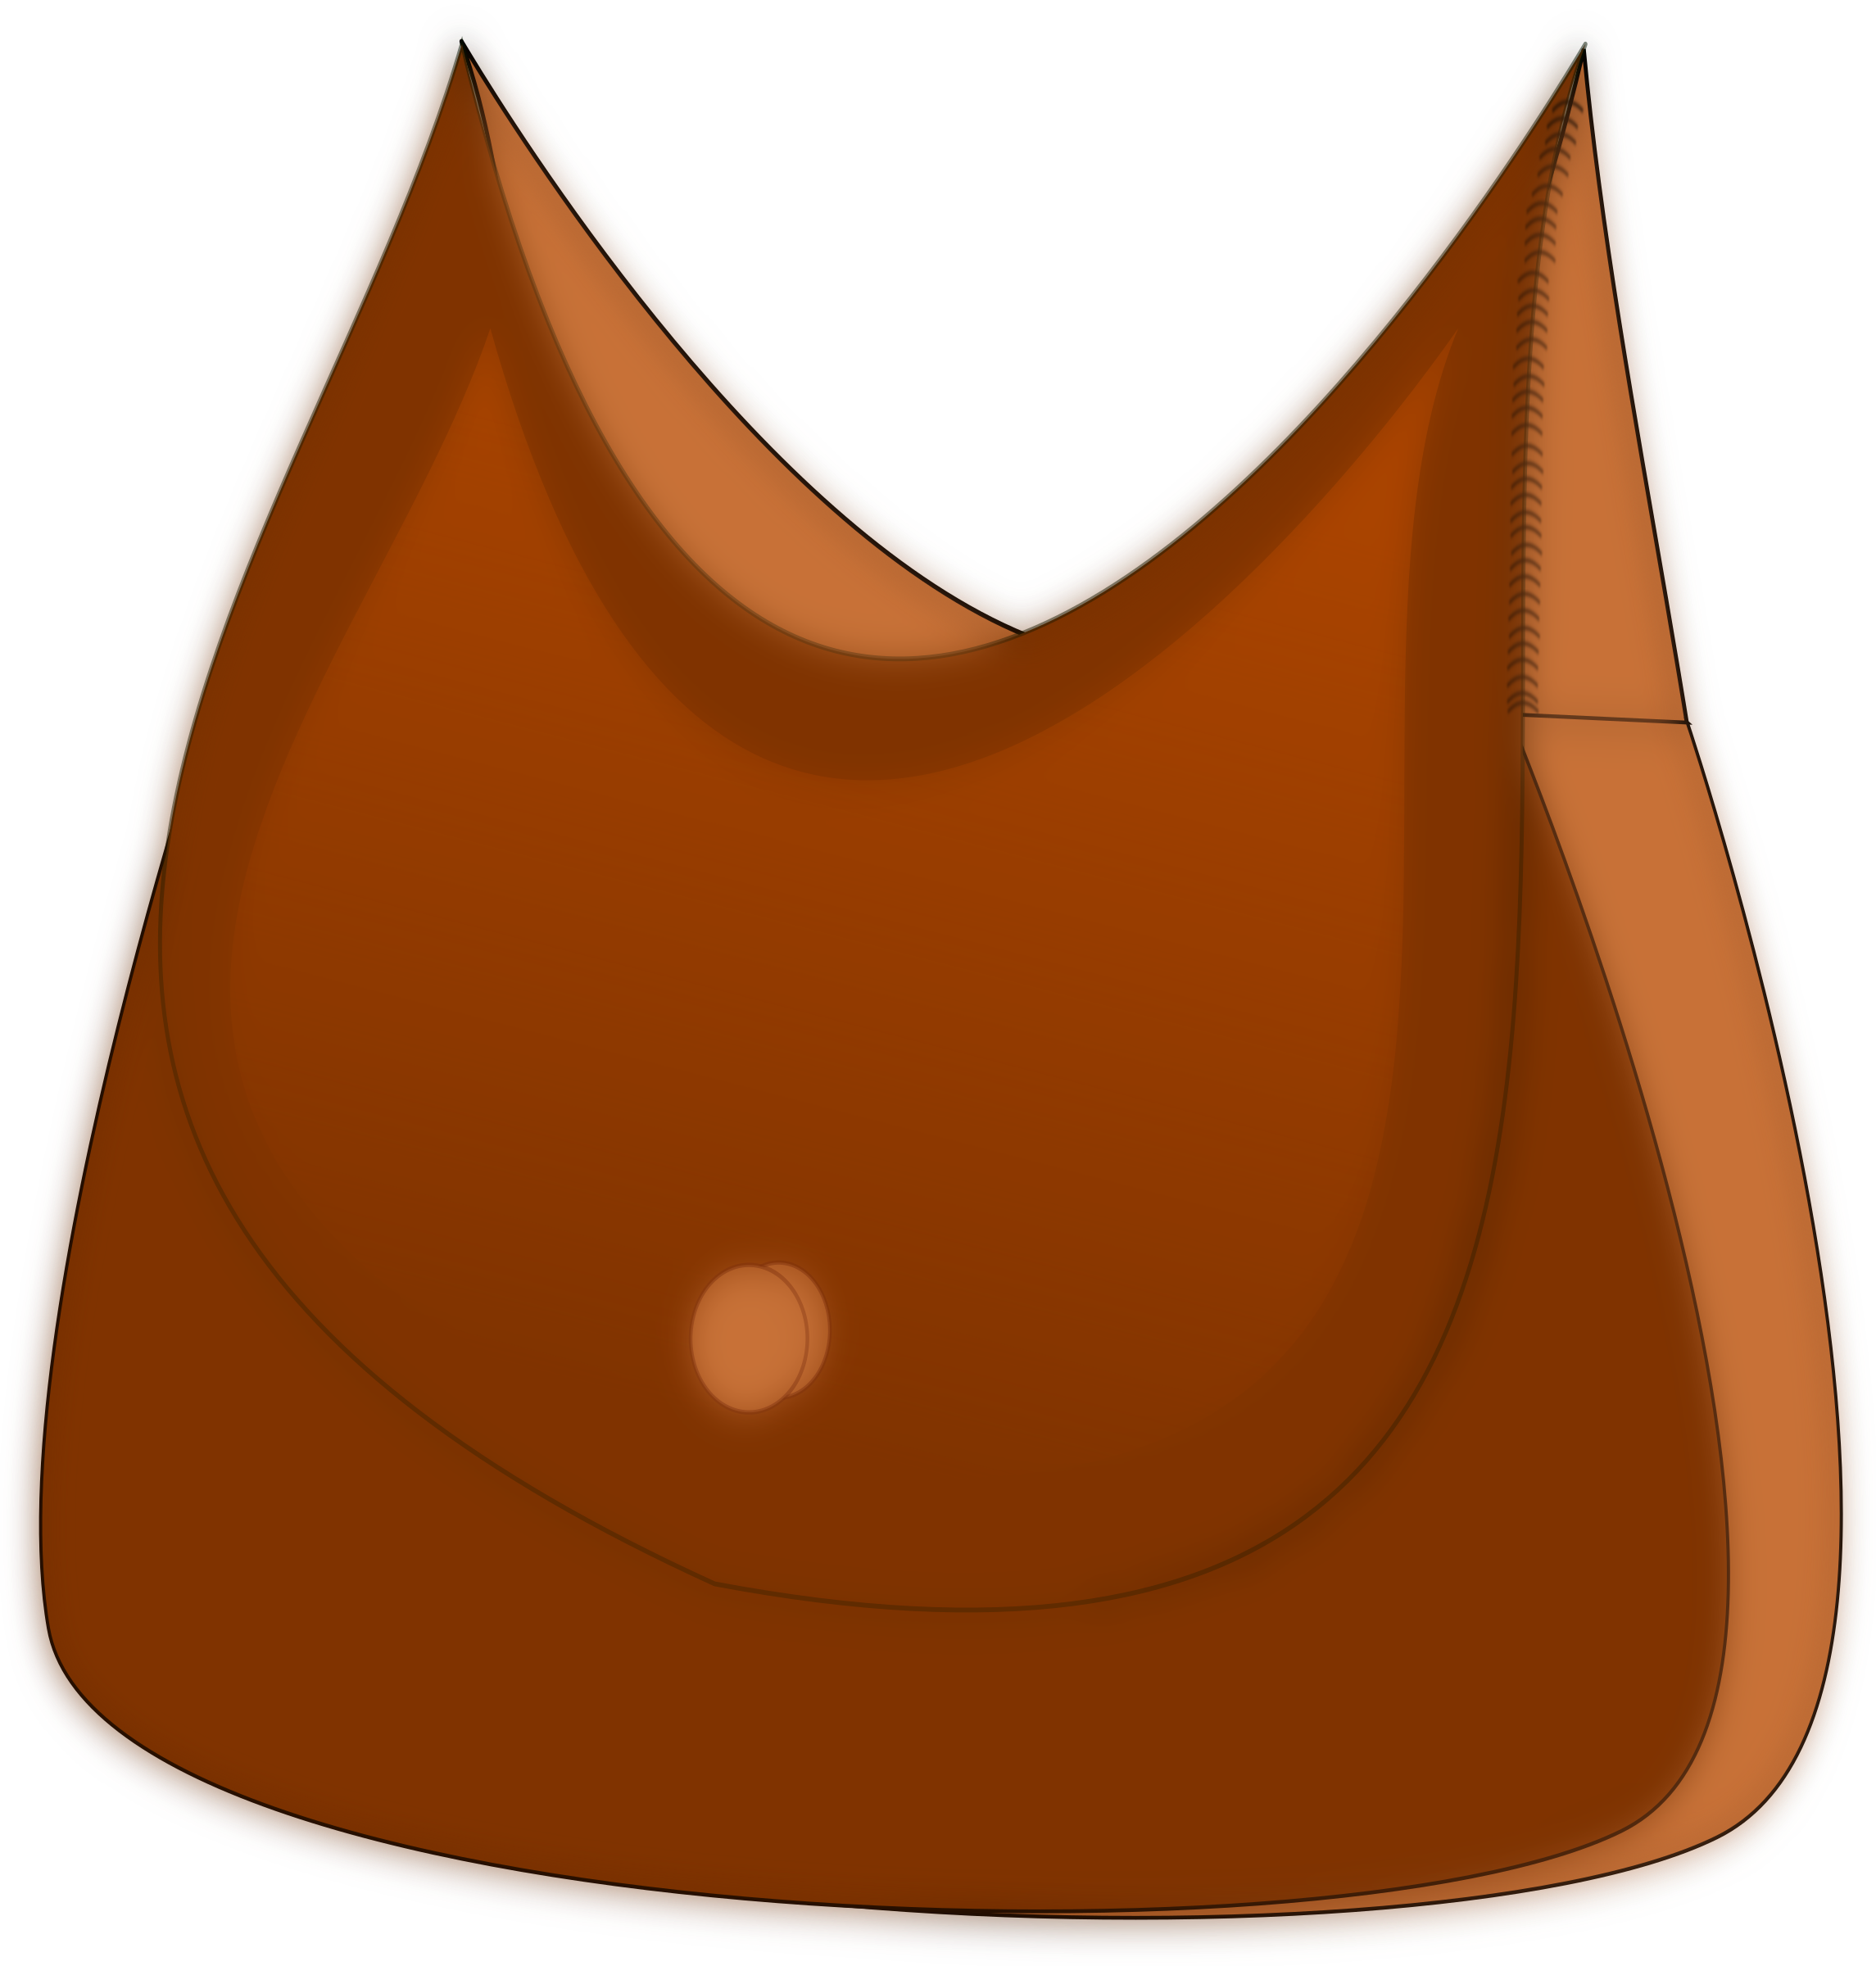 Leather handbag Clip arts